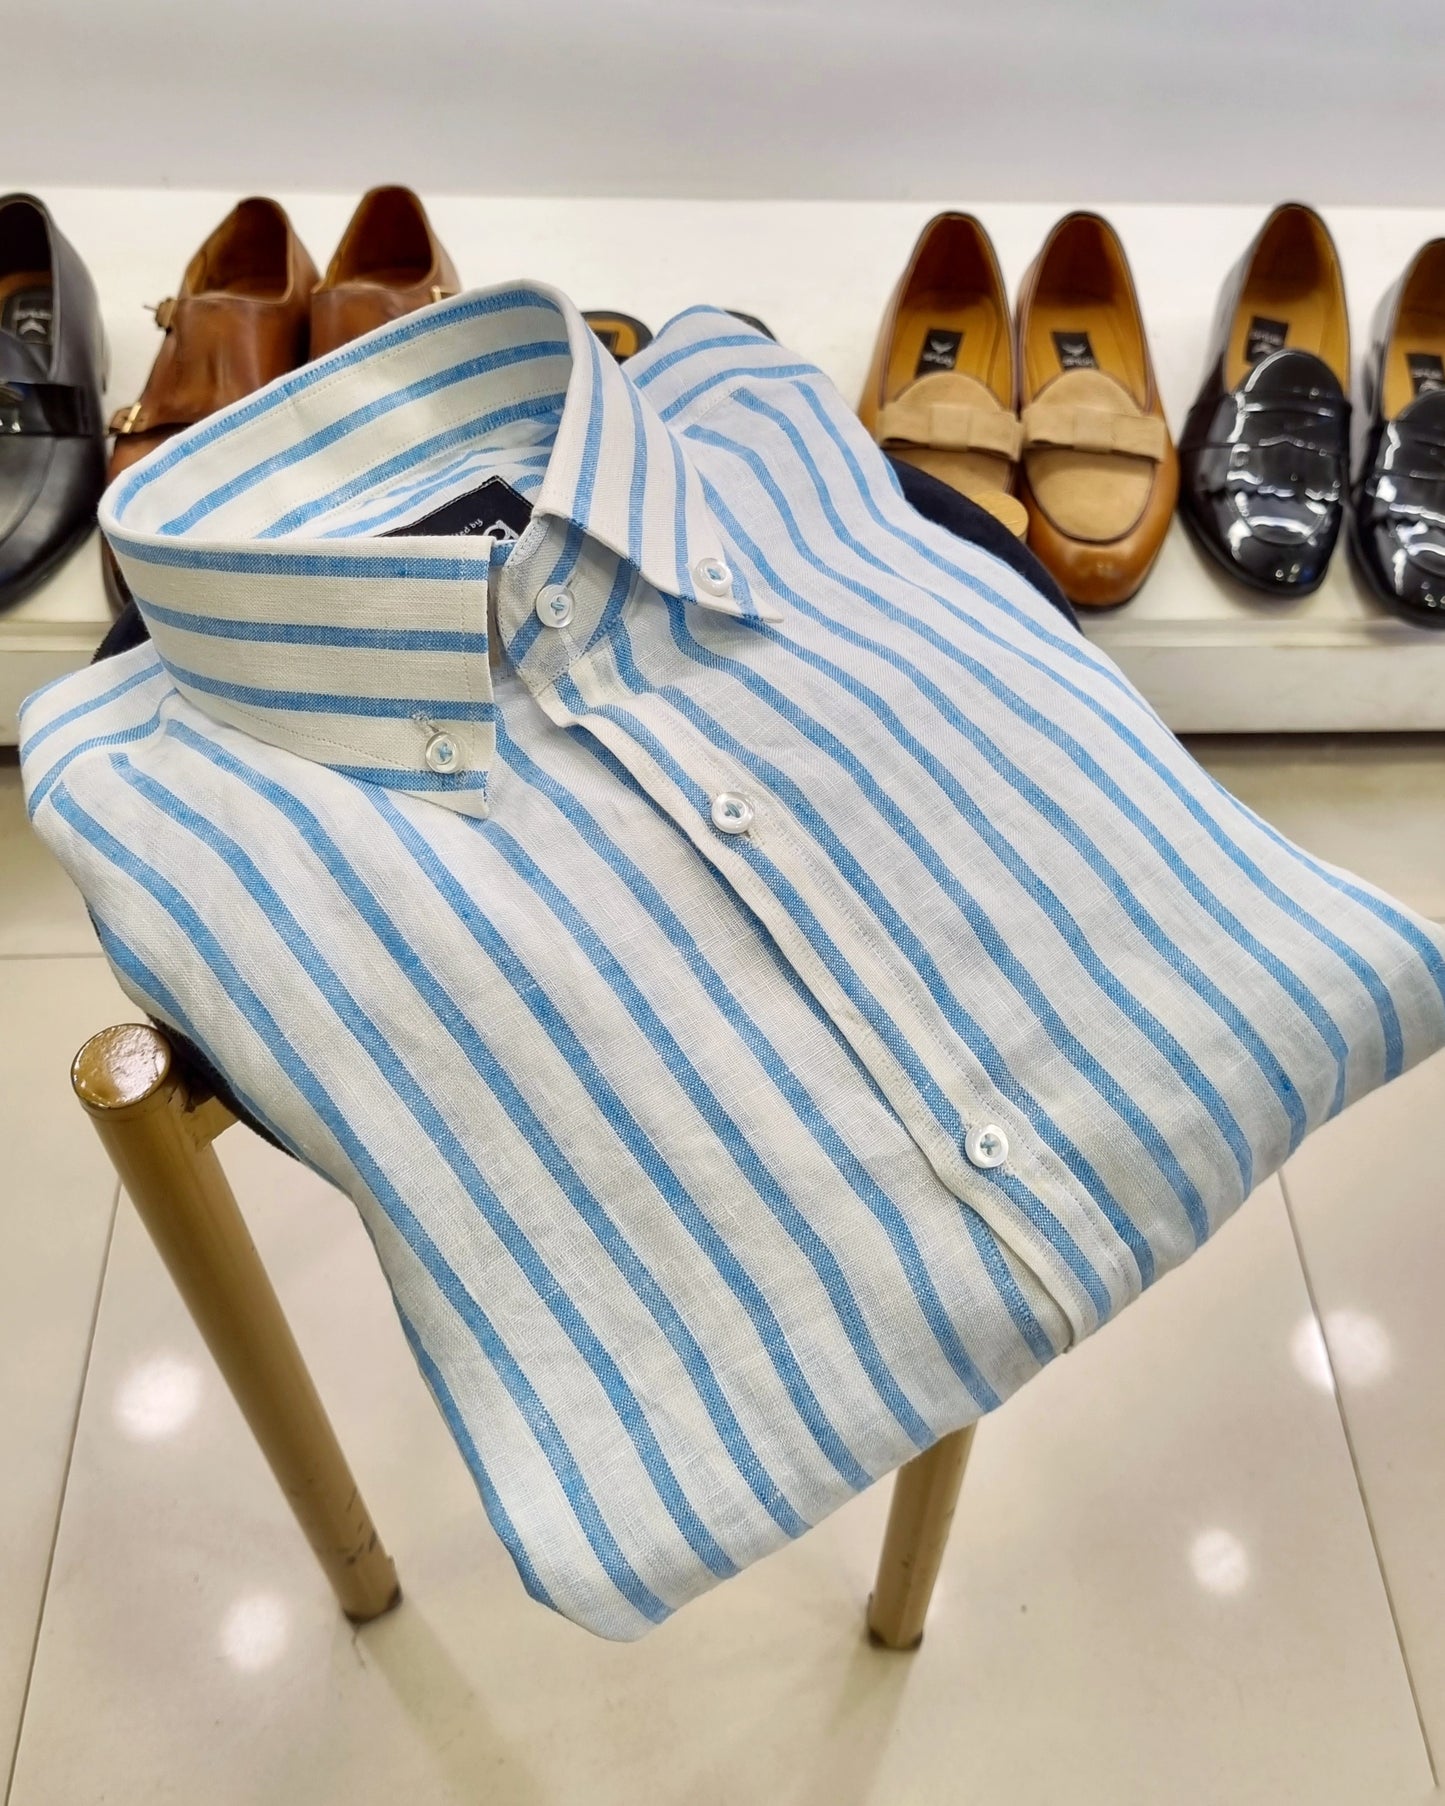 Vivid Sky Blue Linen Striped Shirt.